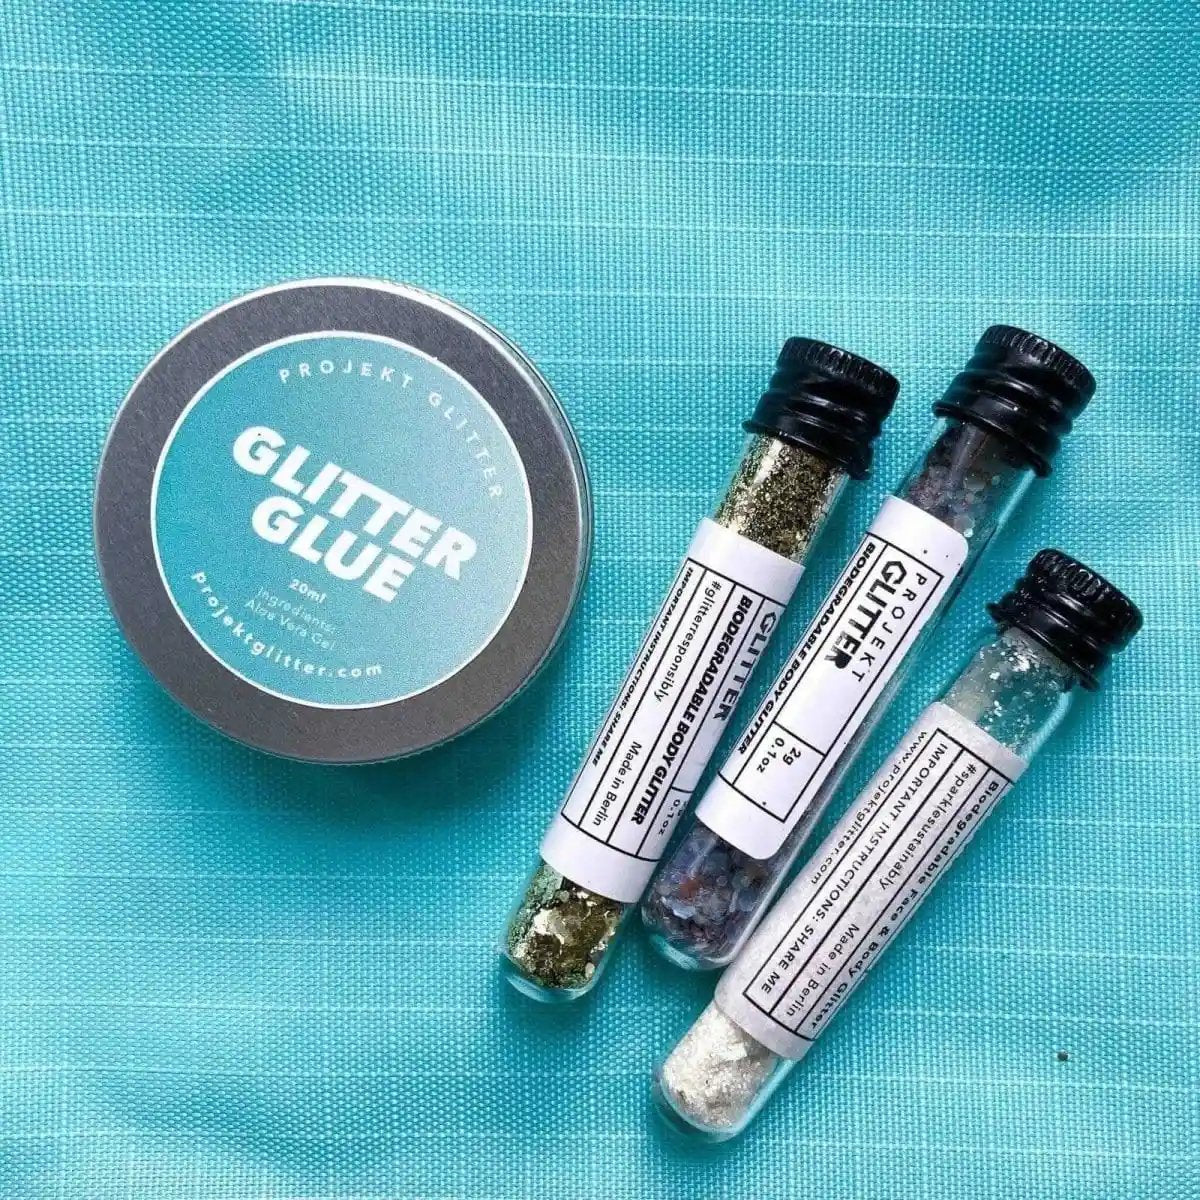 Aloe You Vera Much: Glitter Glue - Projekt Glitter